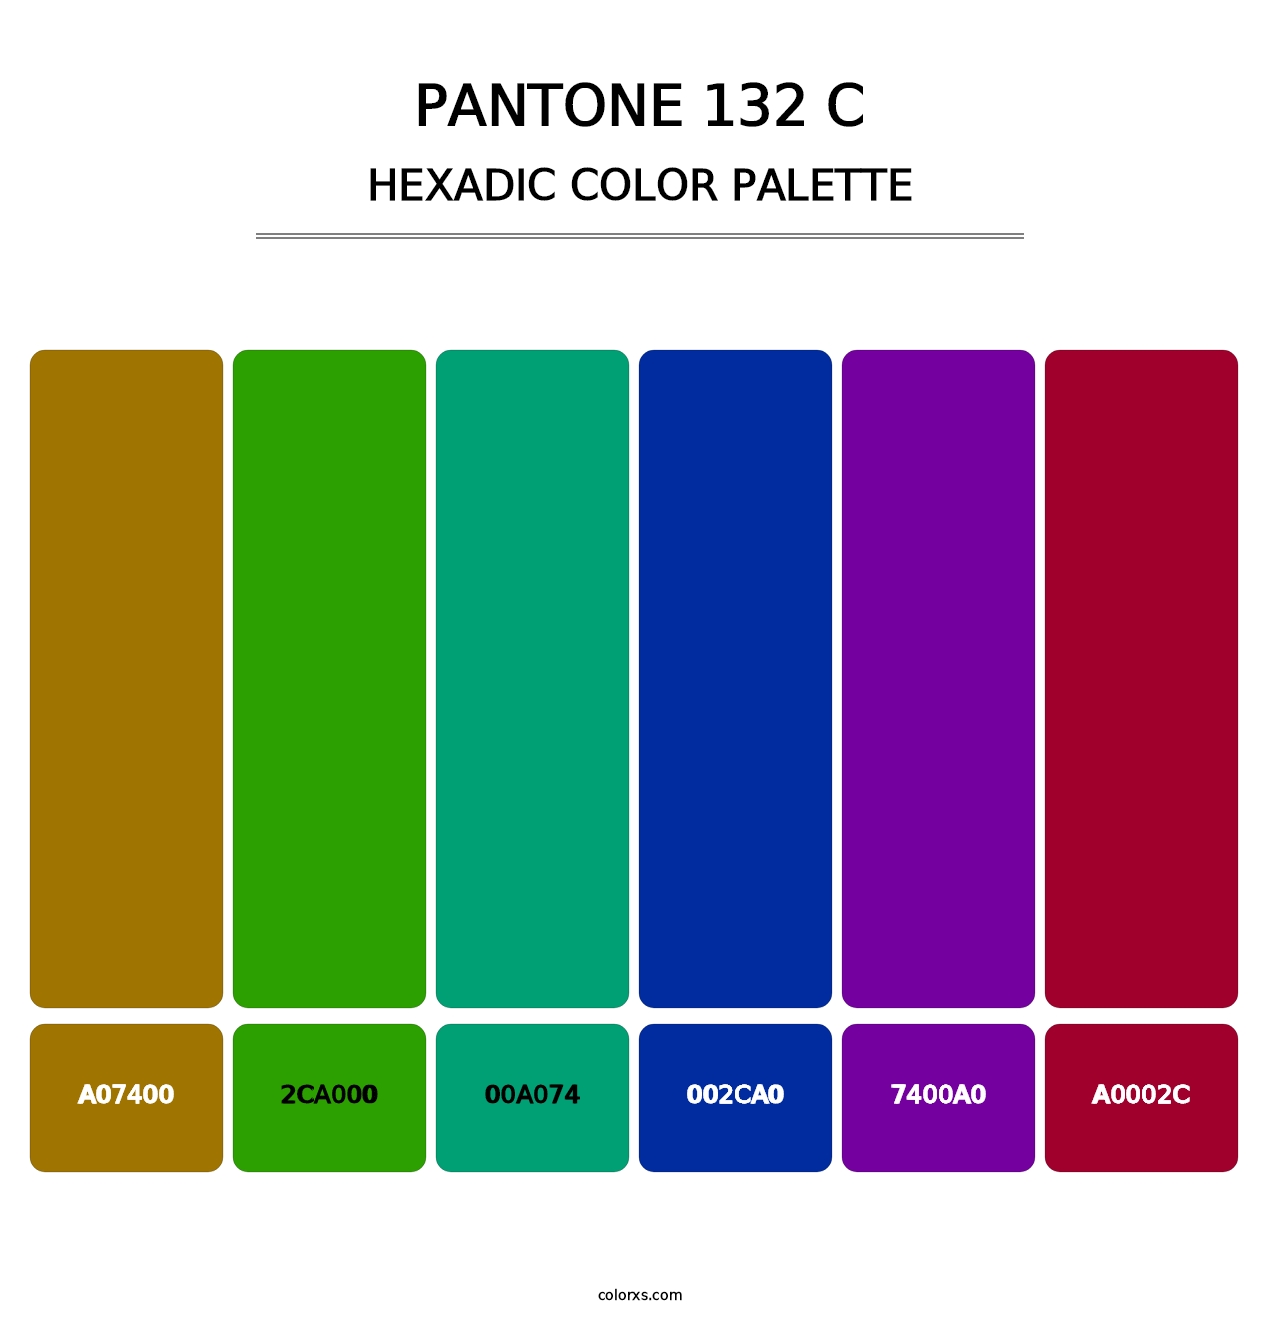 PANTONE 132 C - Hexadic Color Palette